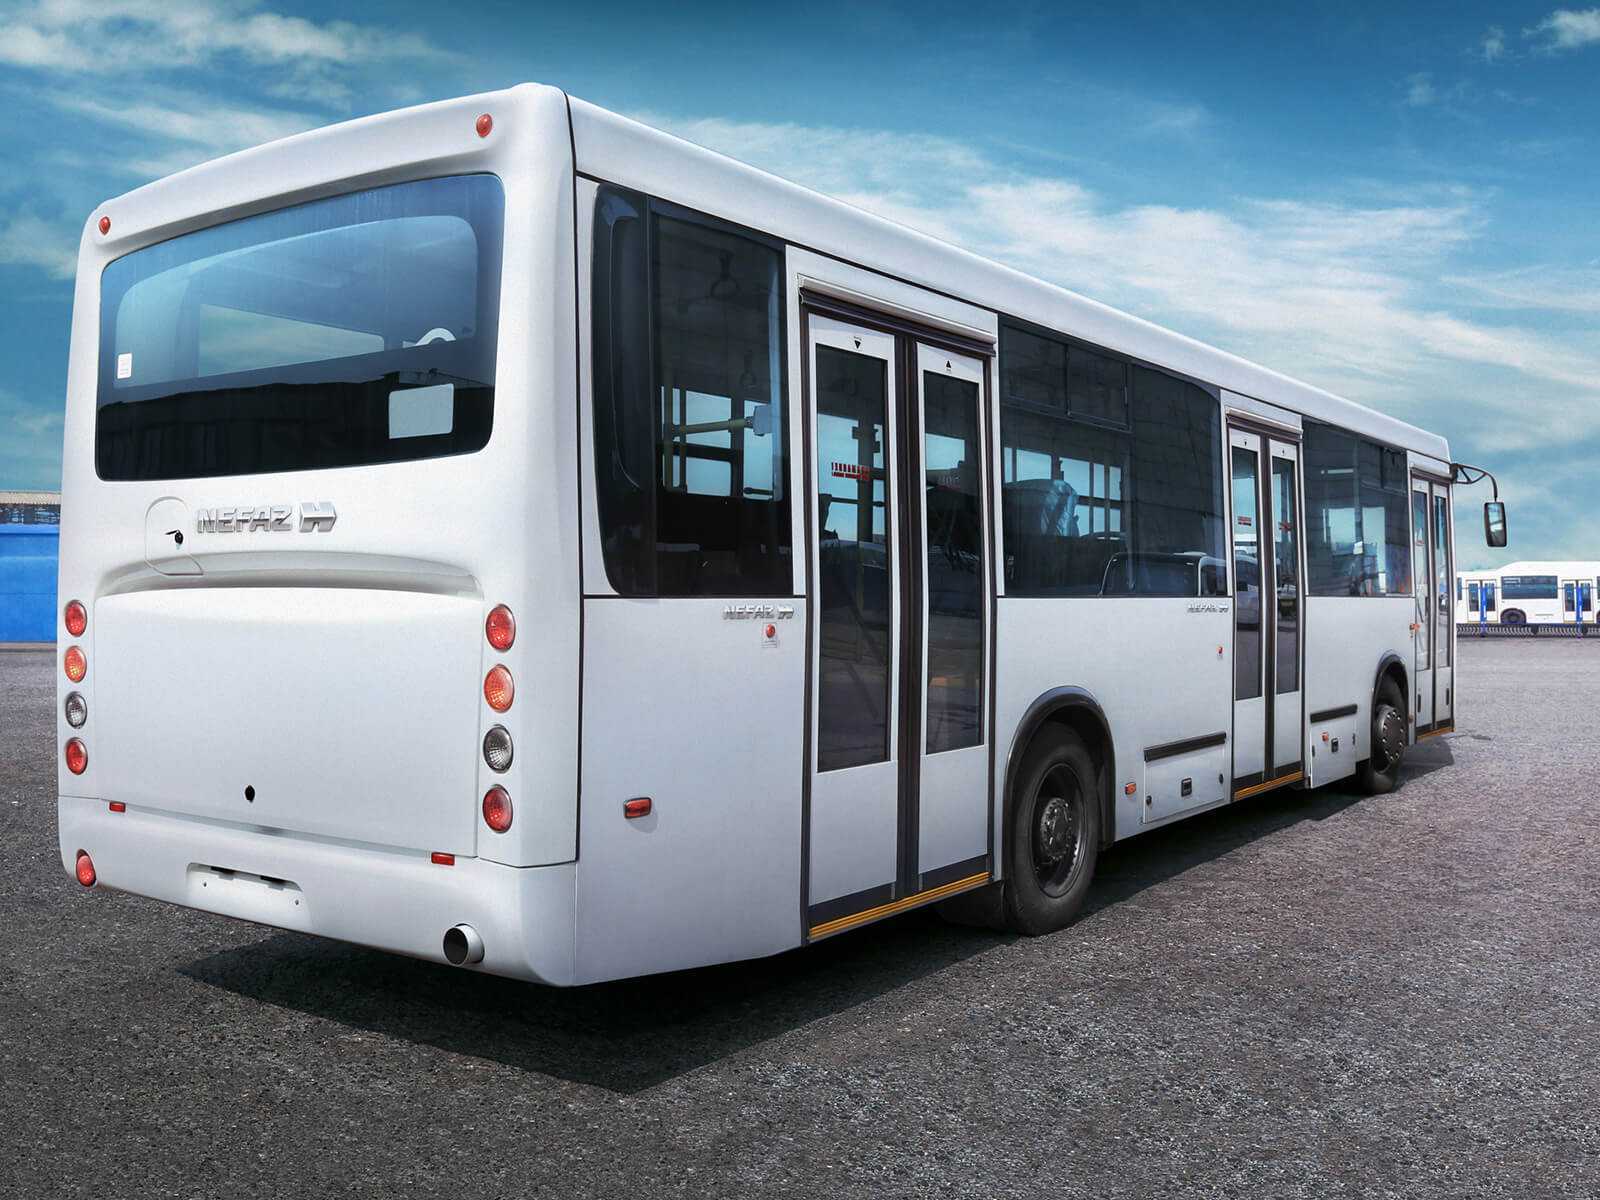 Автобус нефаз-5299 технические характеристики и модификации